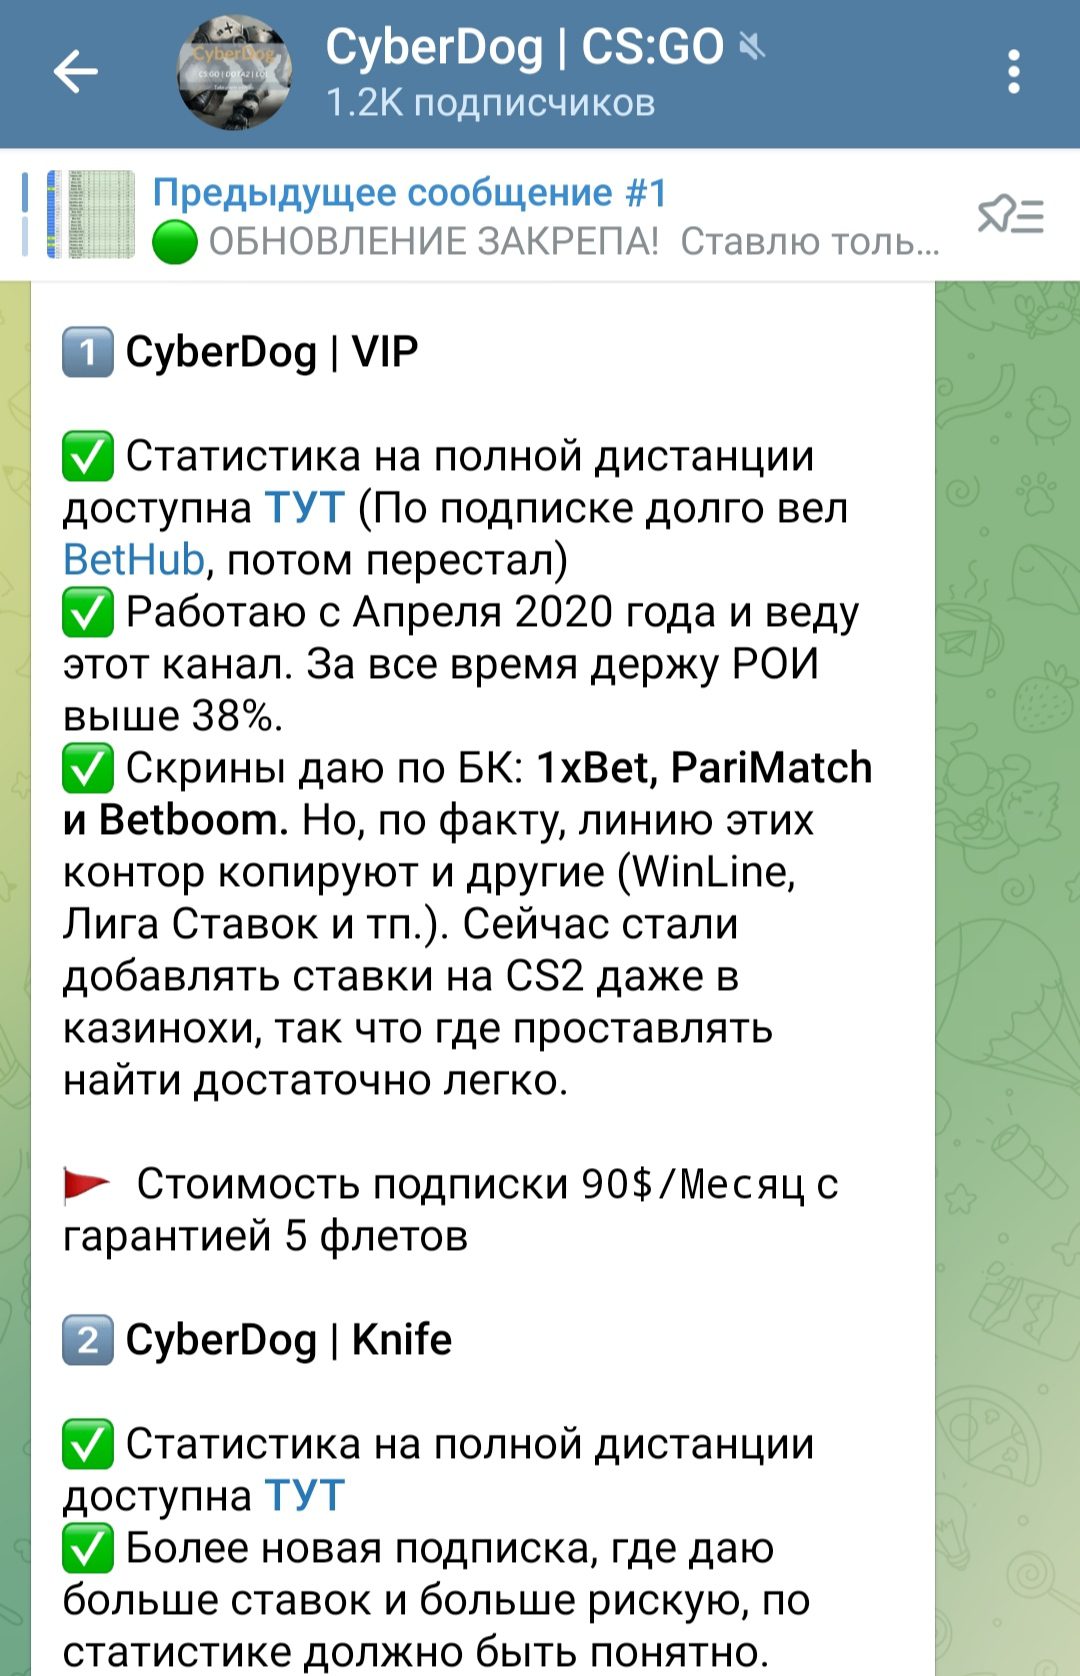 CyberDog телеграм пост